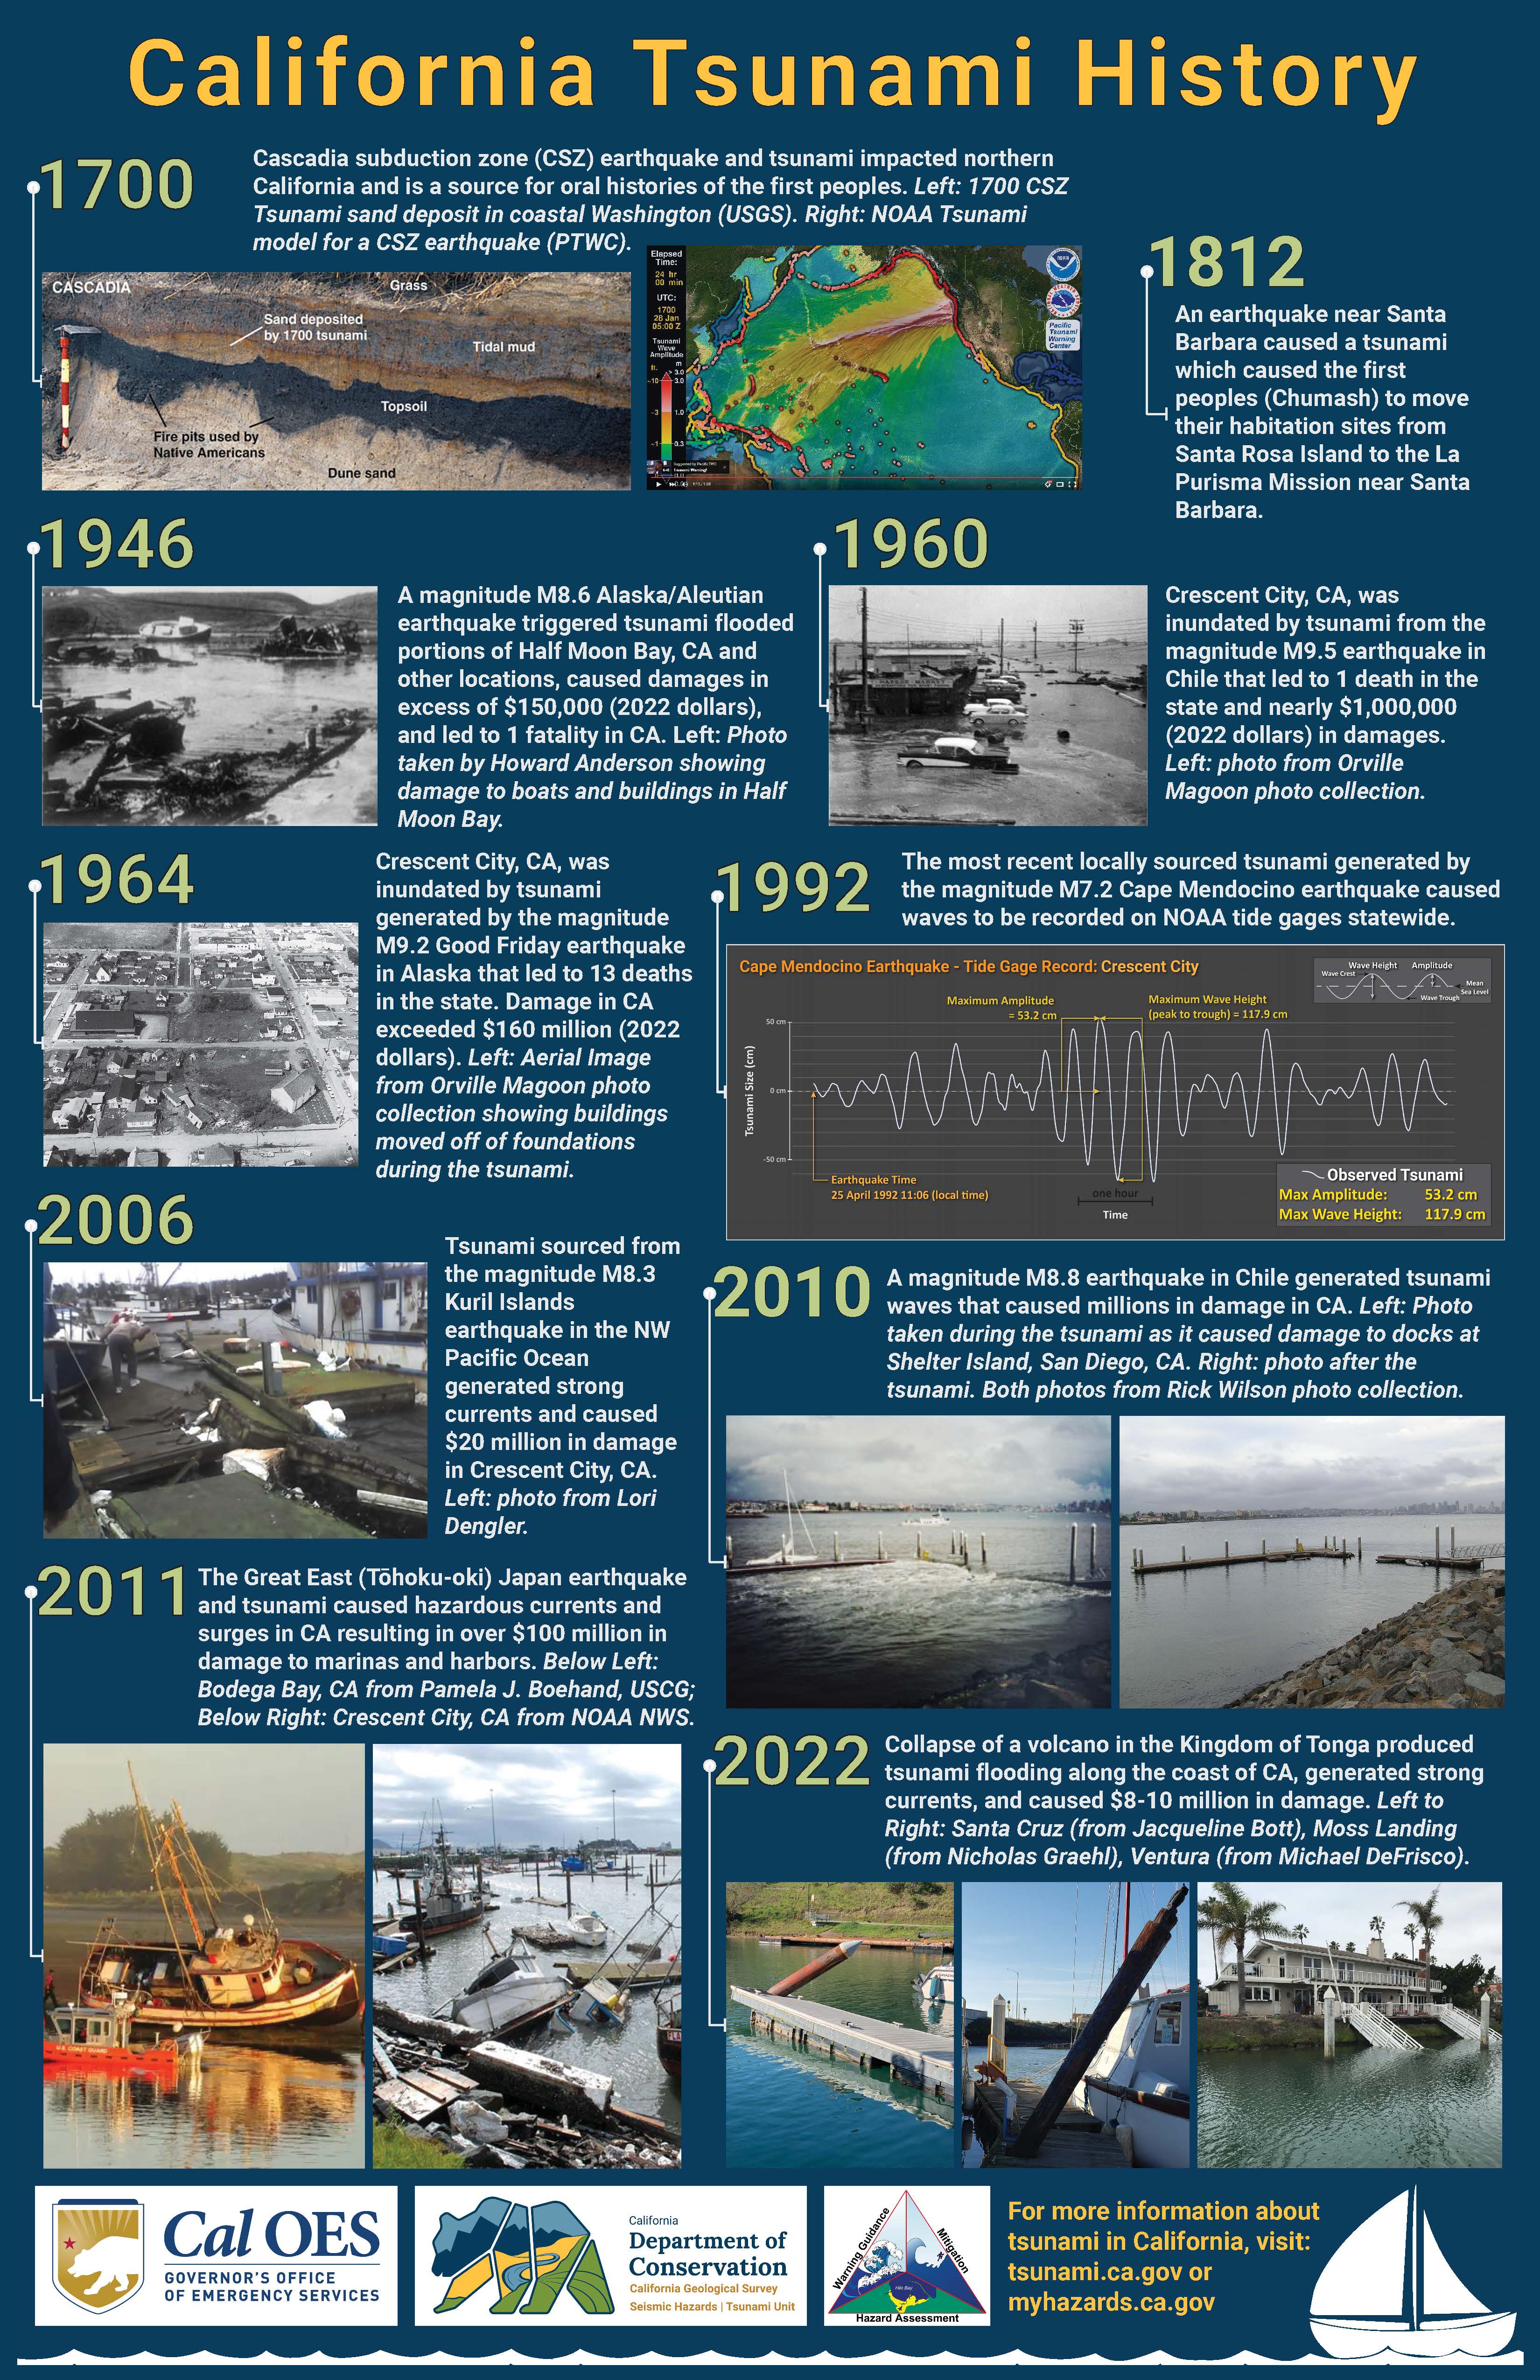 JPG of California Tsunami History poster